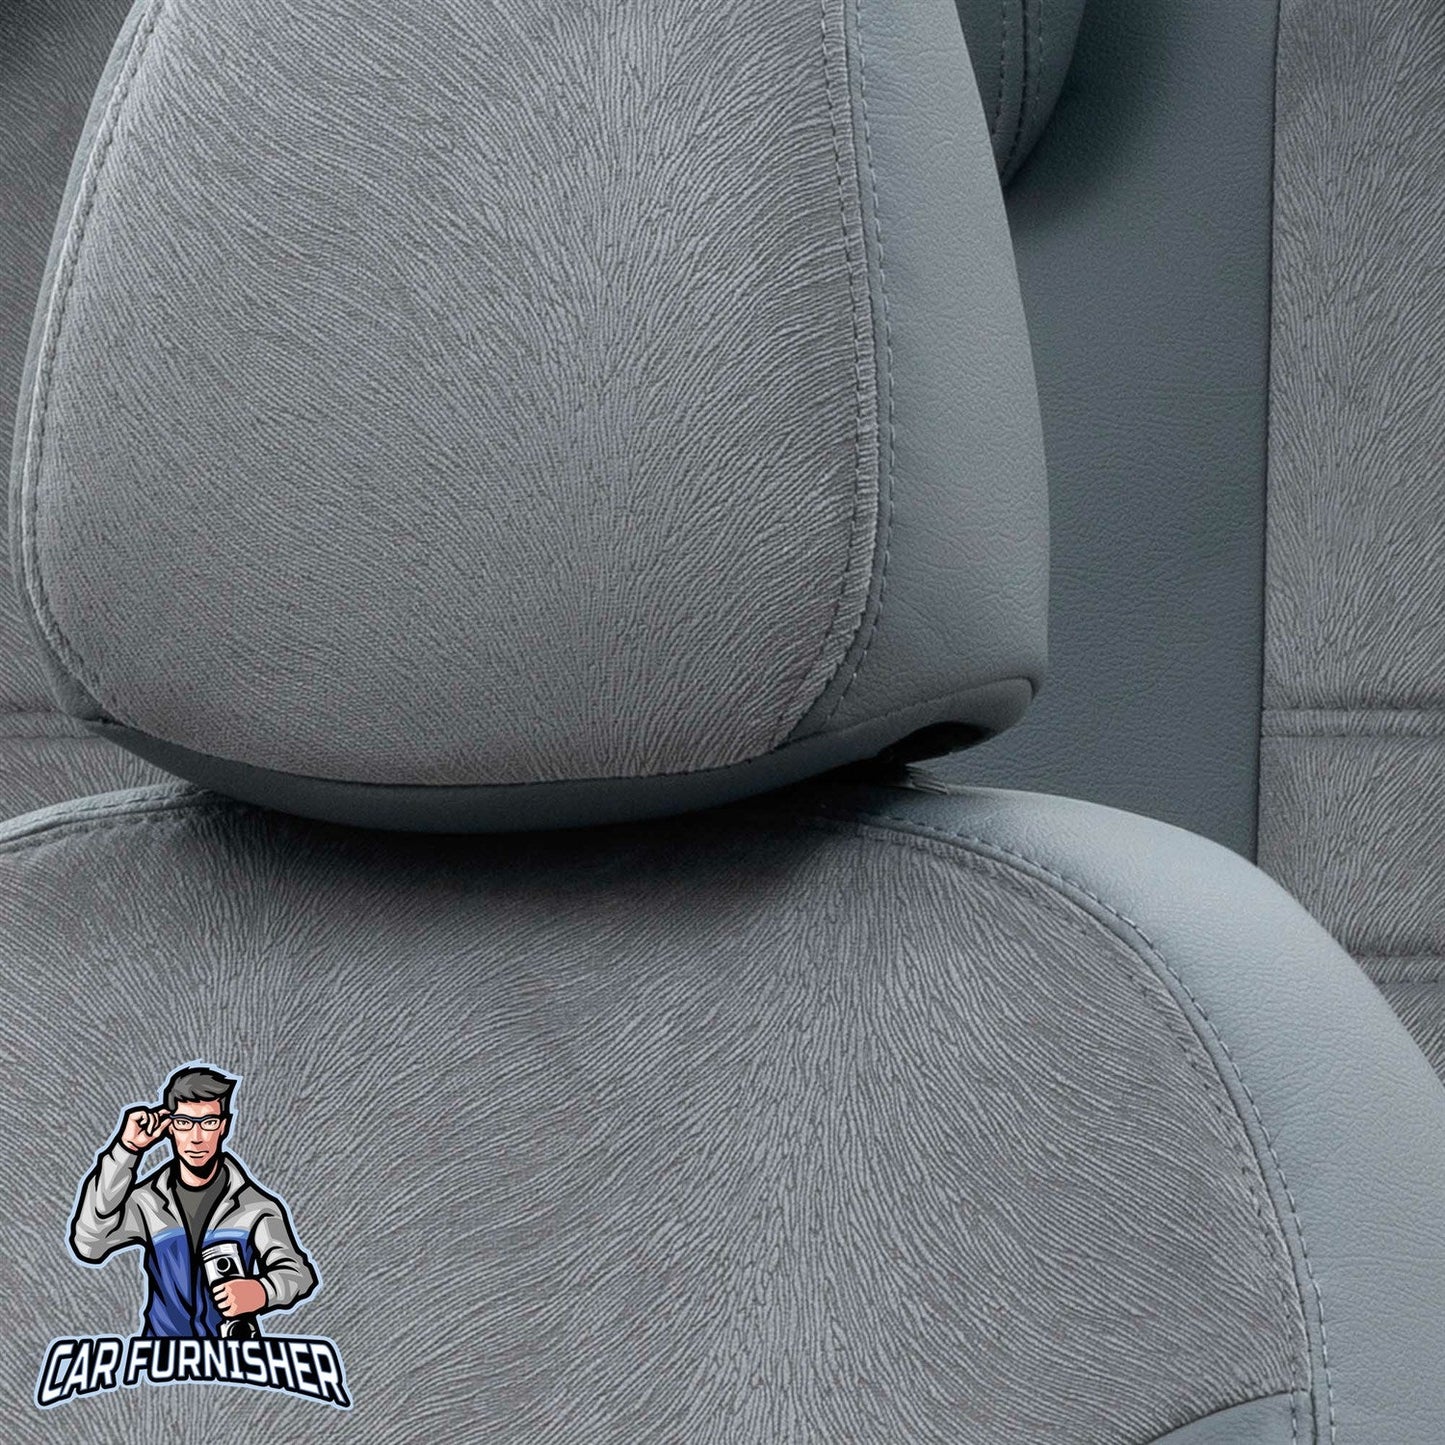 Kia Sorento Seat Covers London Foal Feather Design Smoked Leather & Foal Feather